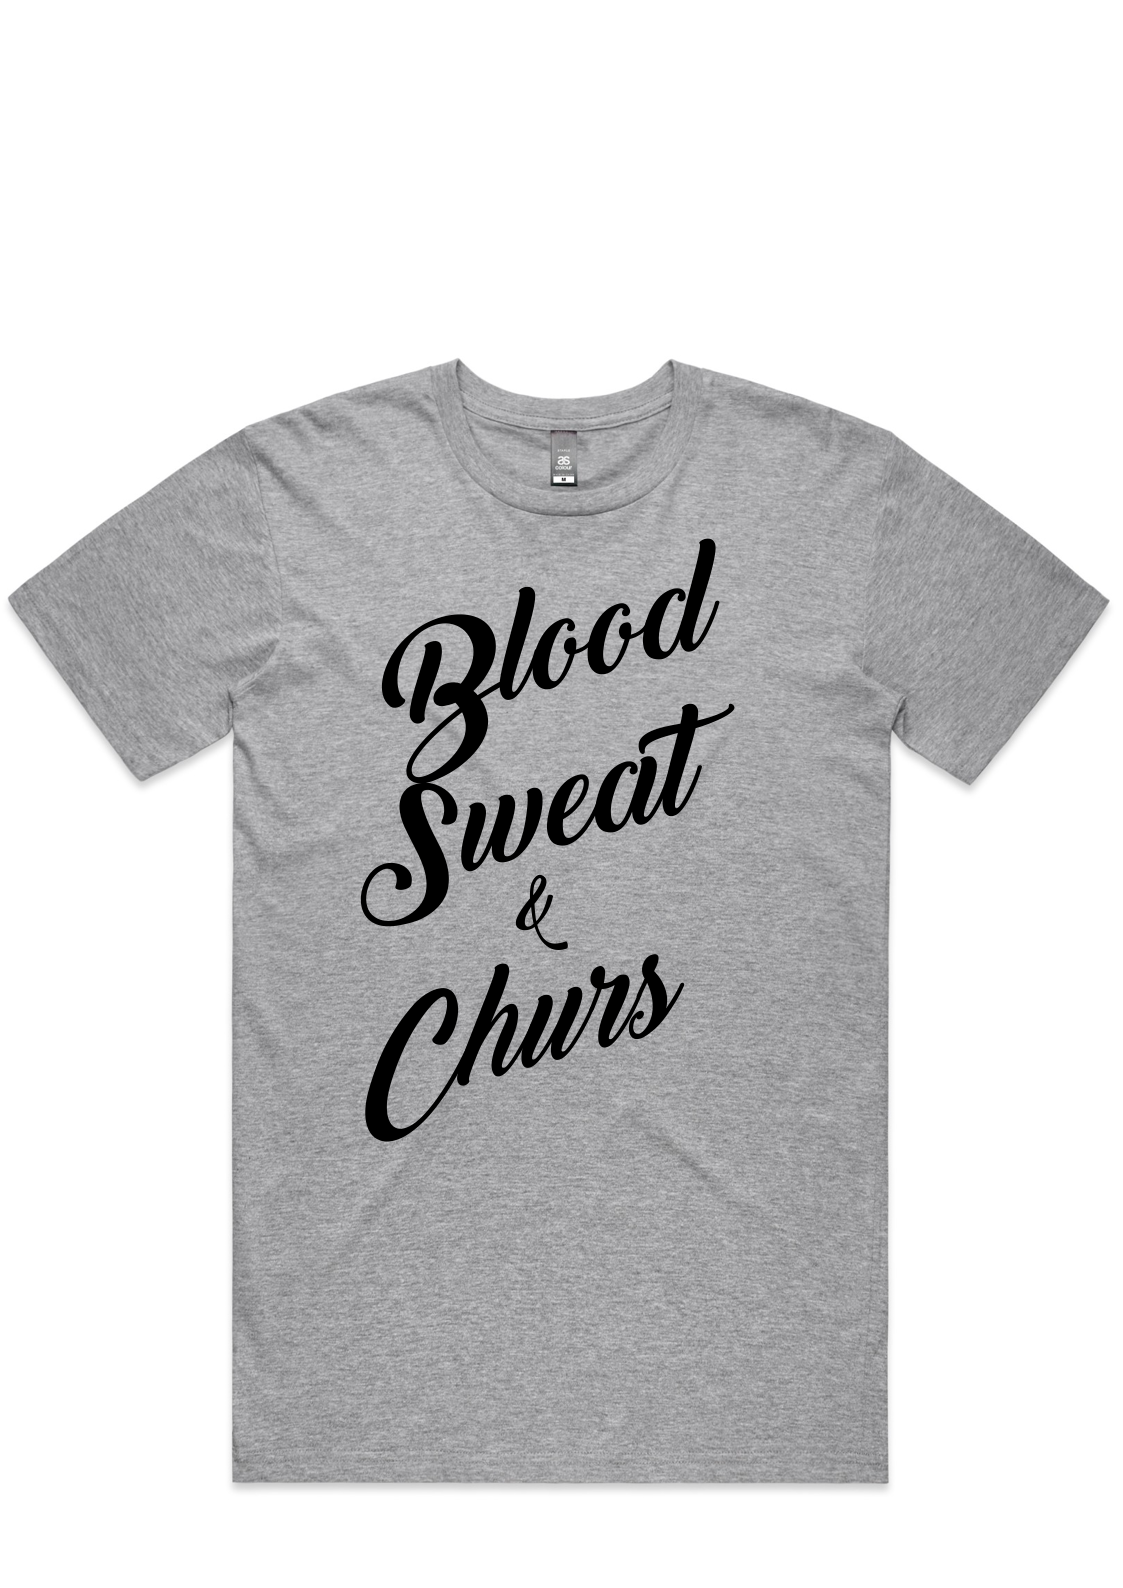 Blood Sweat & Churs